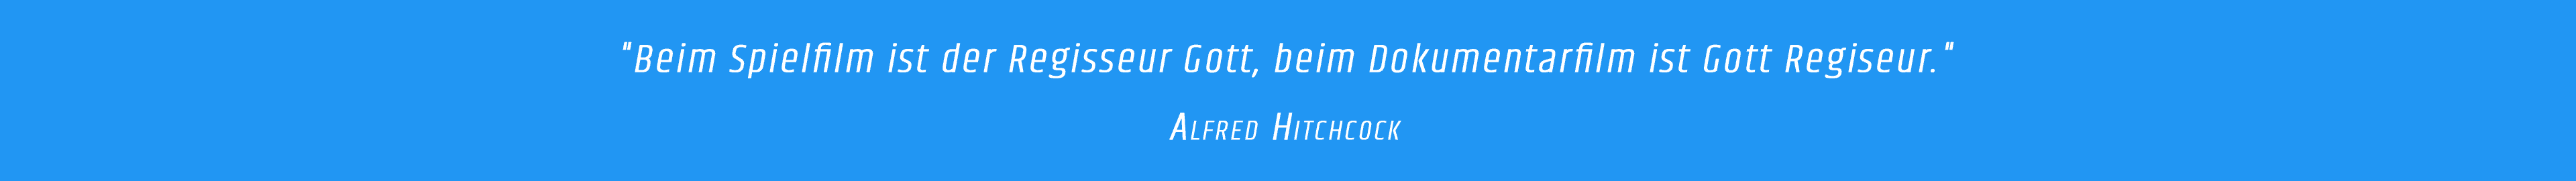 Zitat - Alfred Hitchcock